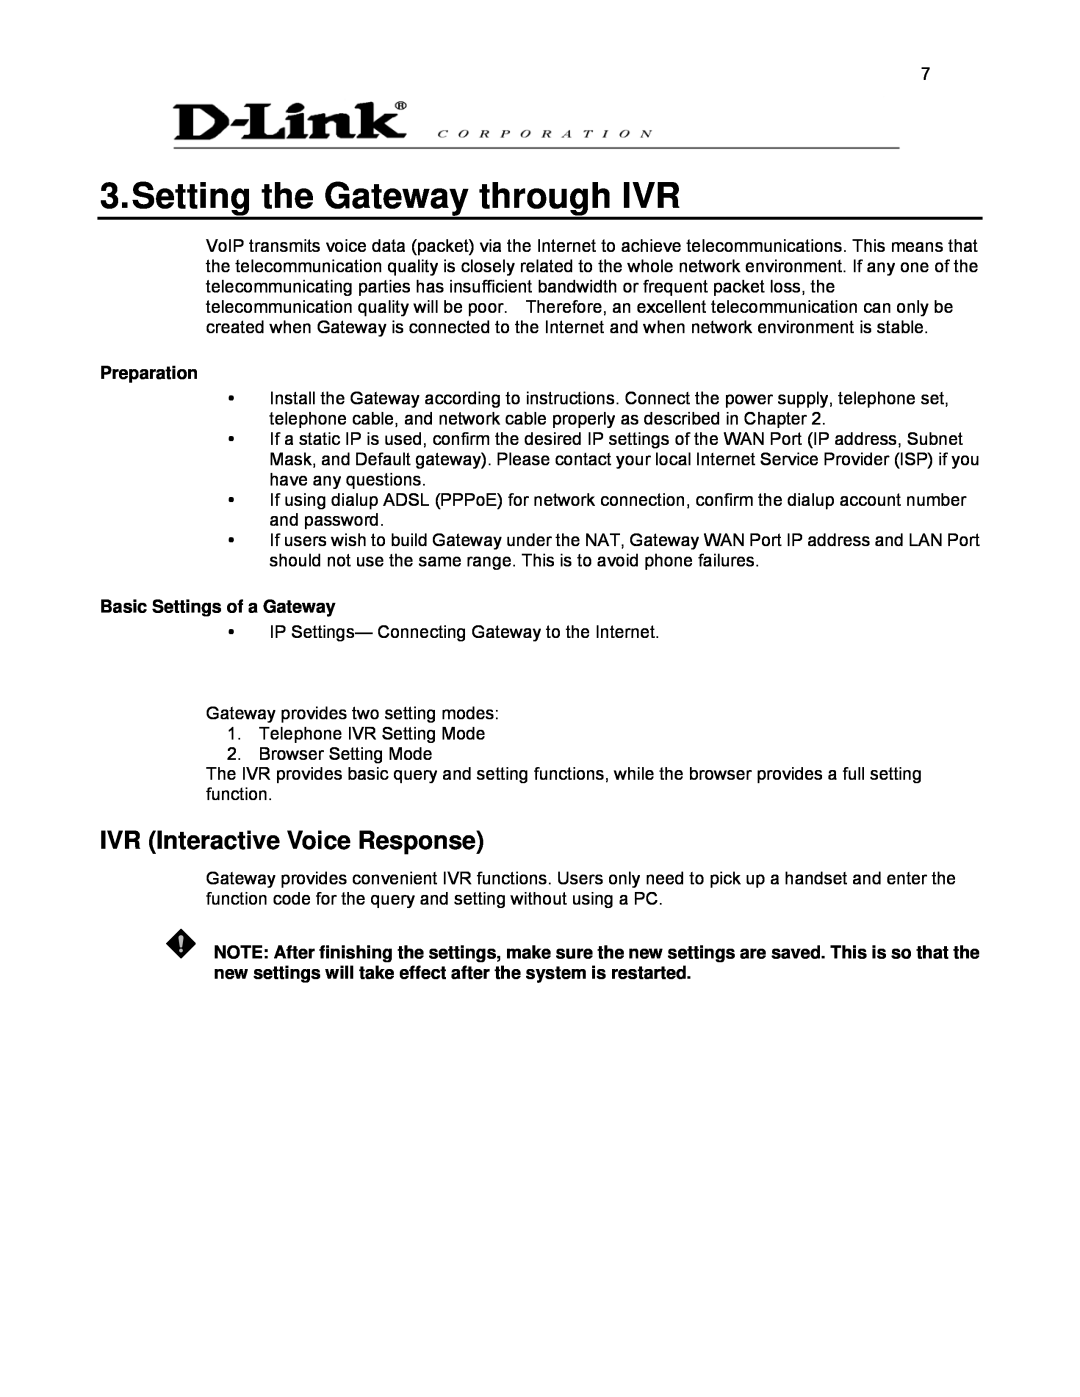 D-Link DVG-2032S Setting the Gateway through IVR, IVR Interactive Voice Response, Preparation, Basic Settings of a Gateway 